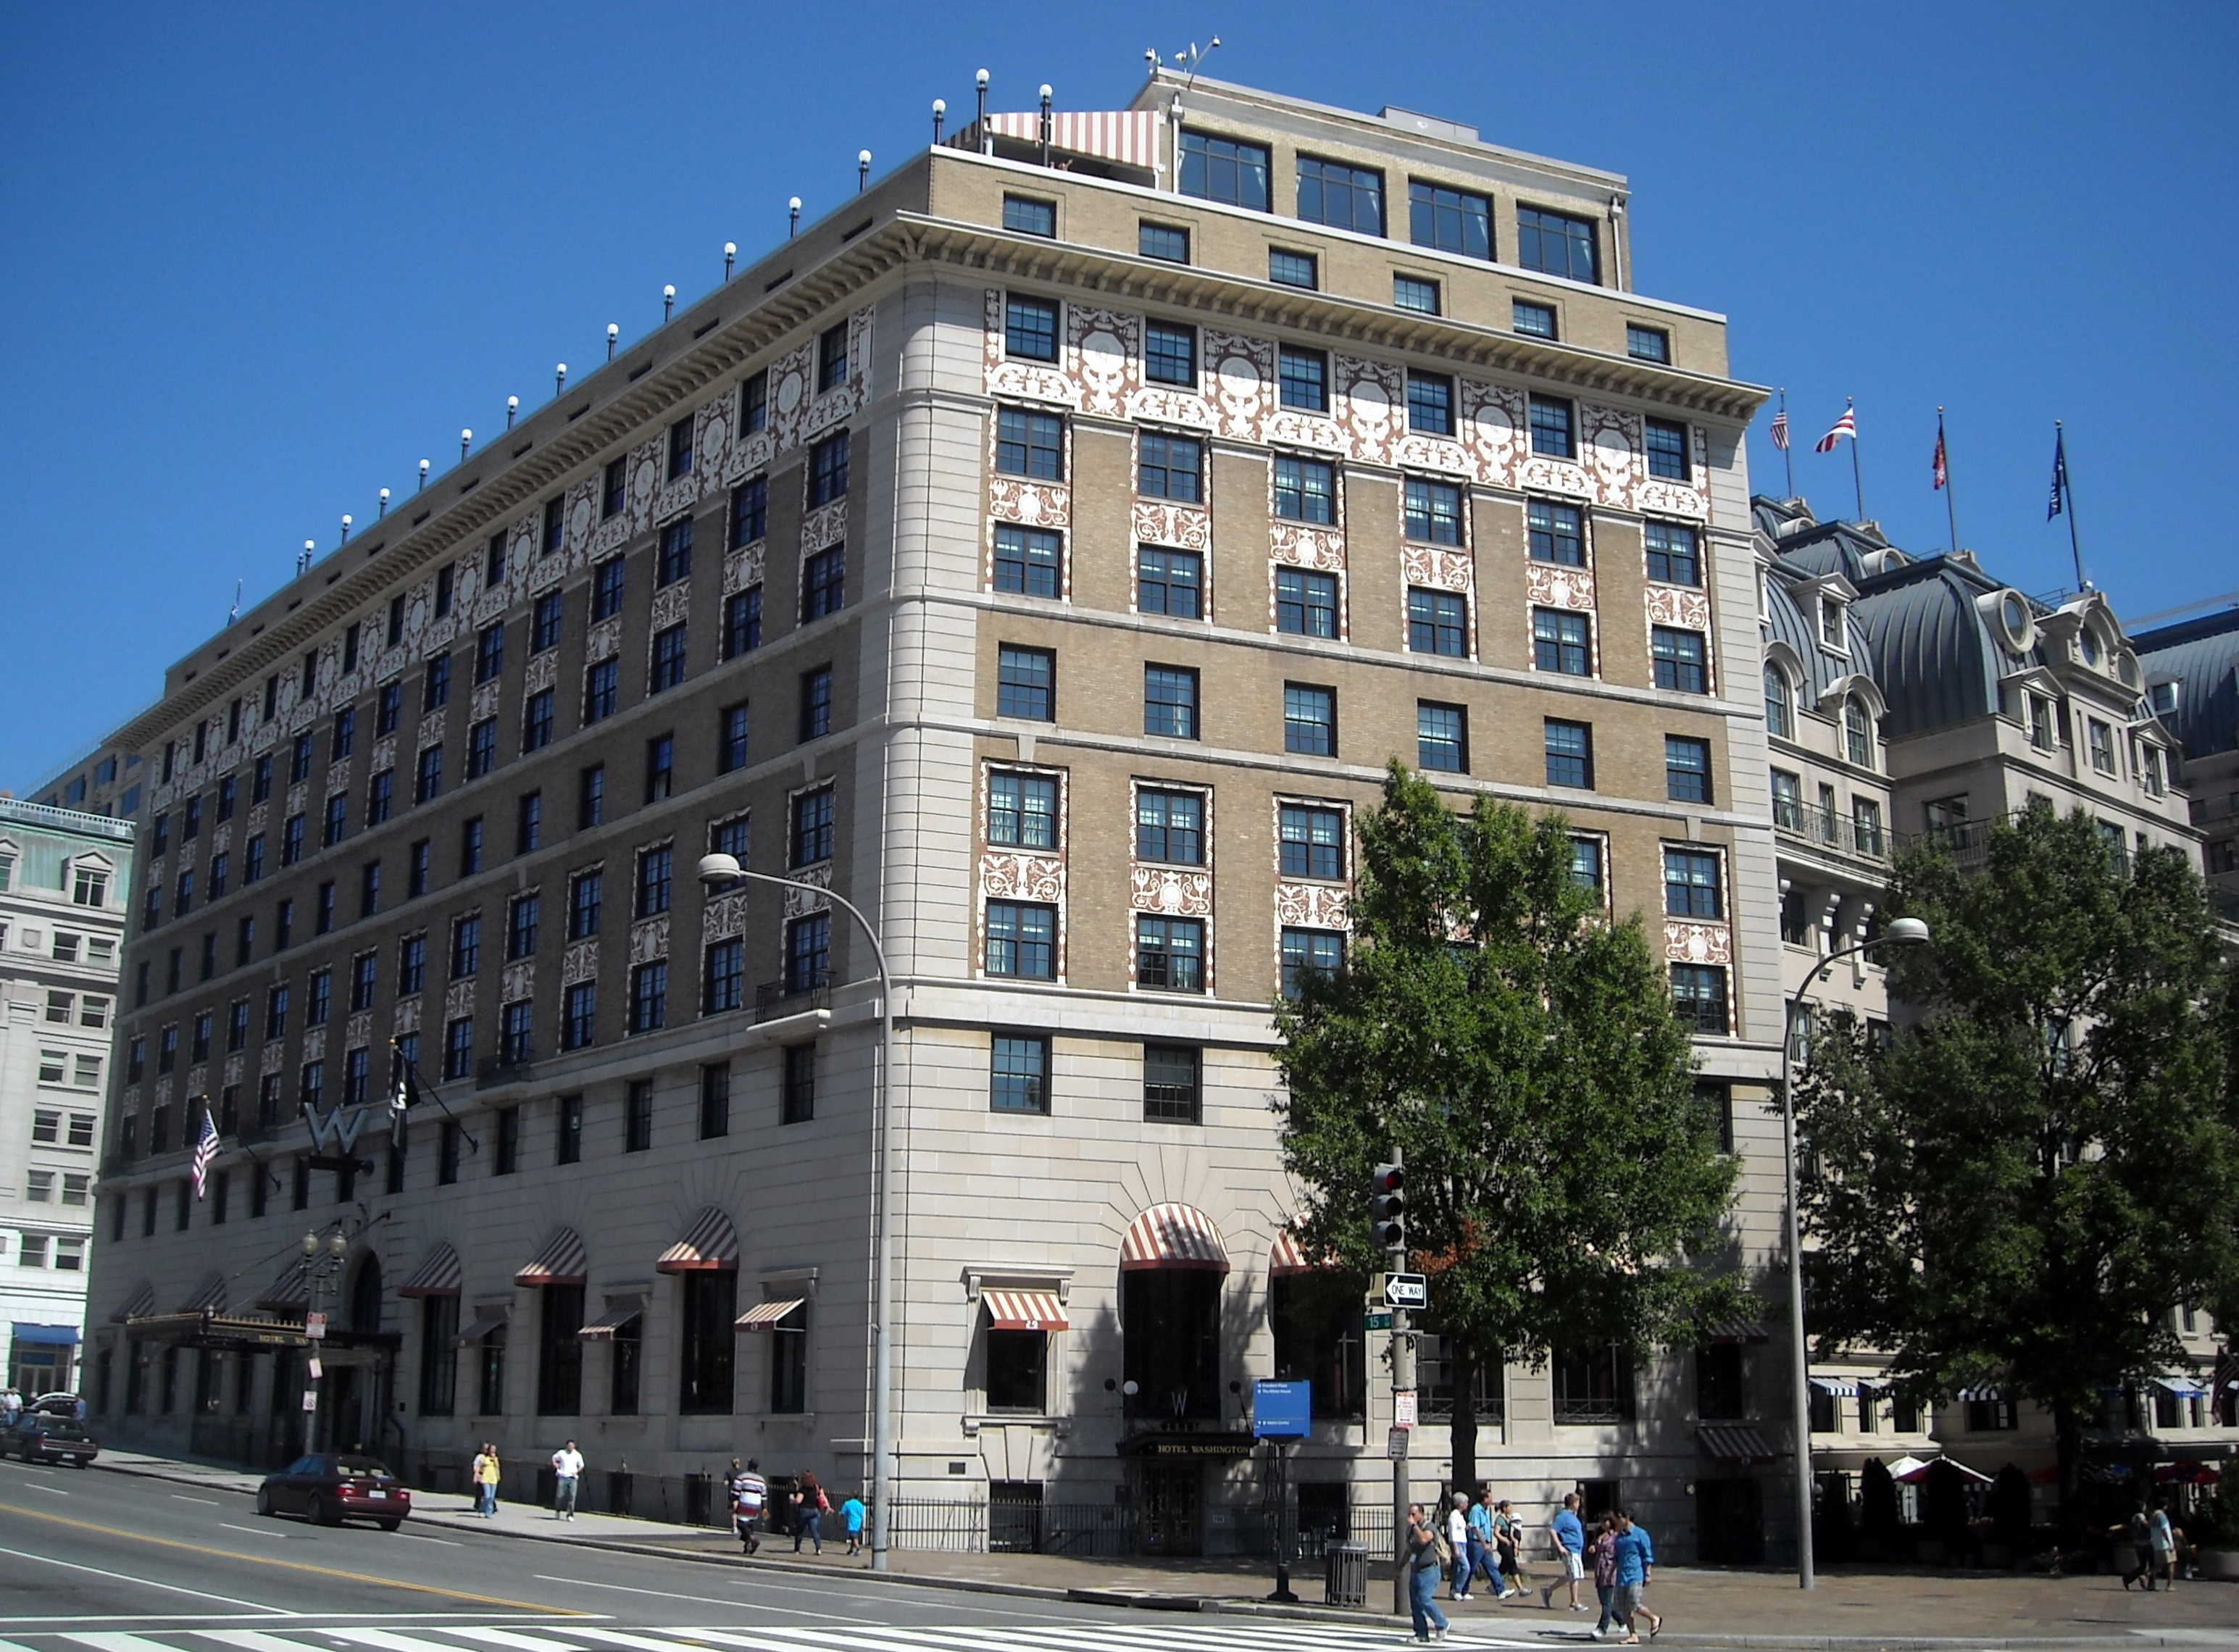 File:W Hotel - Washington, D.C..JPG - Wikipedia, the free encyclopedia